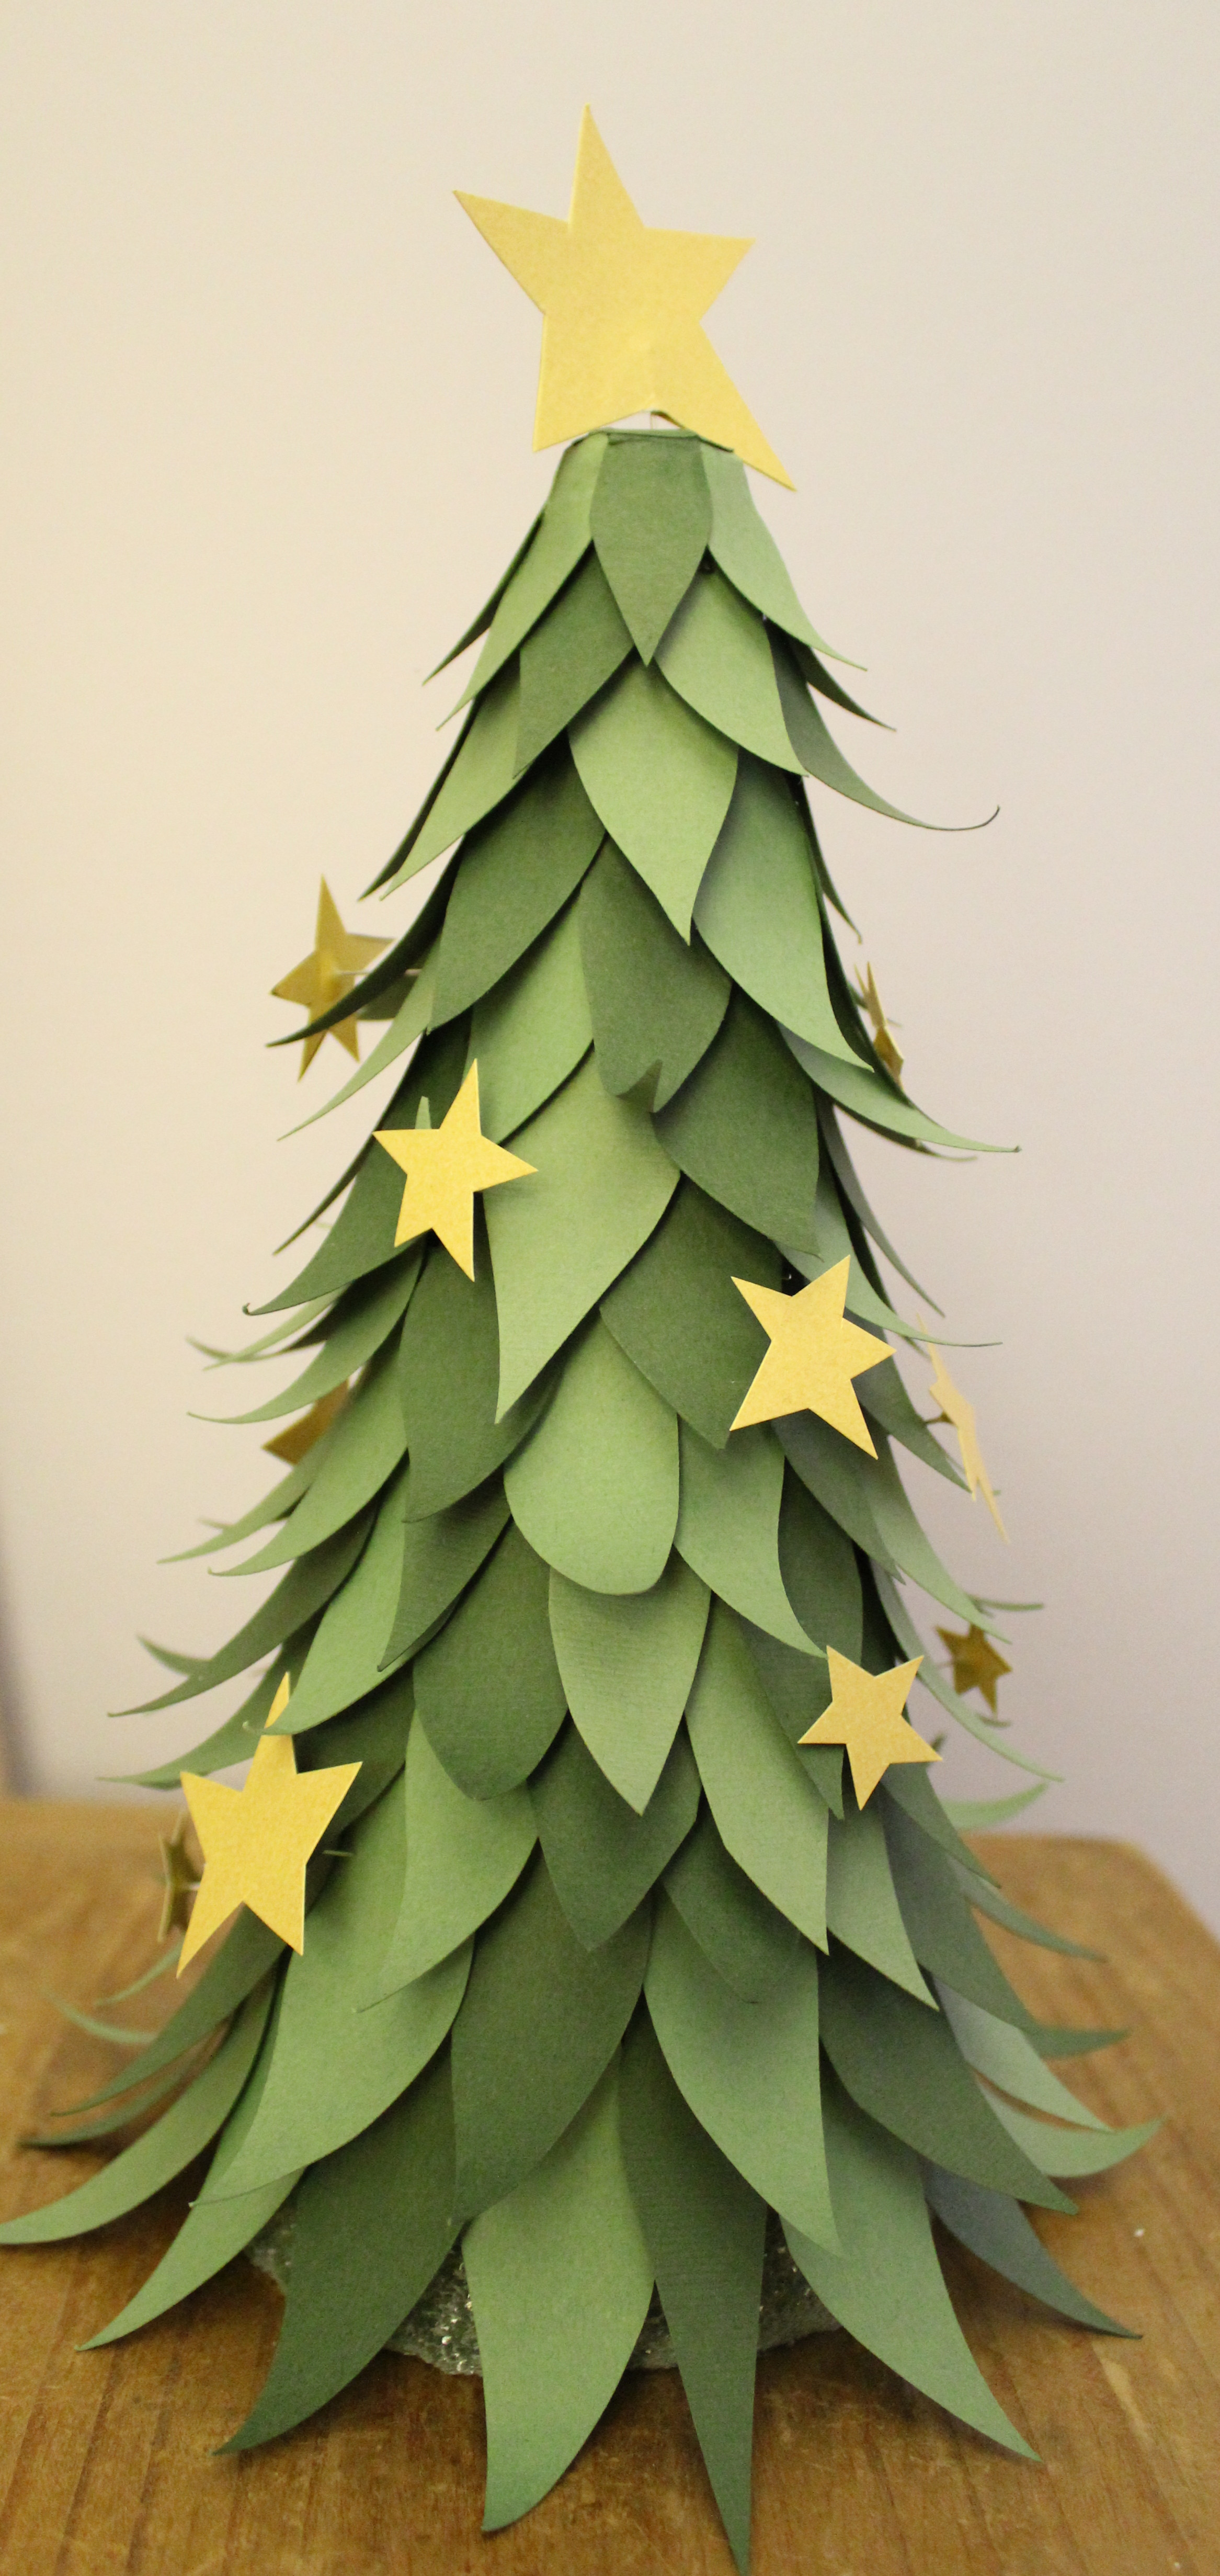 Best ideas about DIY Felt Christmas Tree
. Save or Pin DIY Felt Christmas Trees Now.